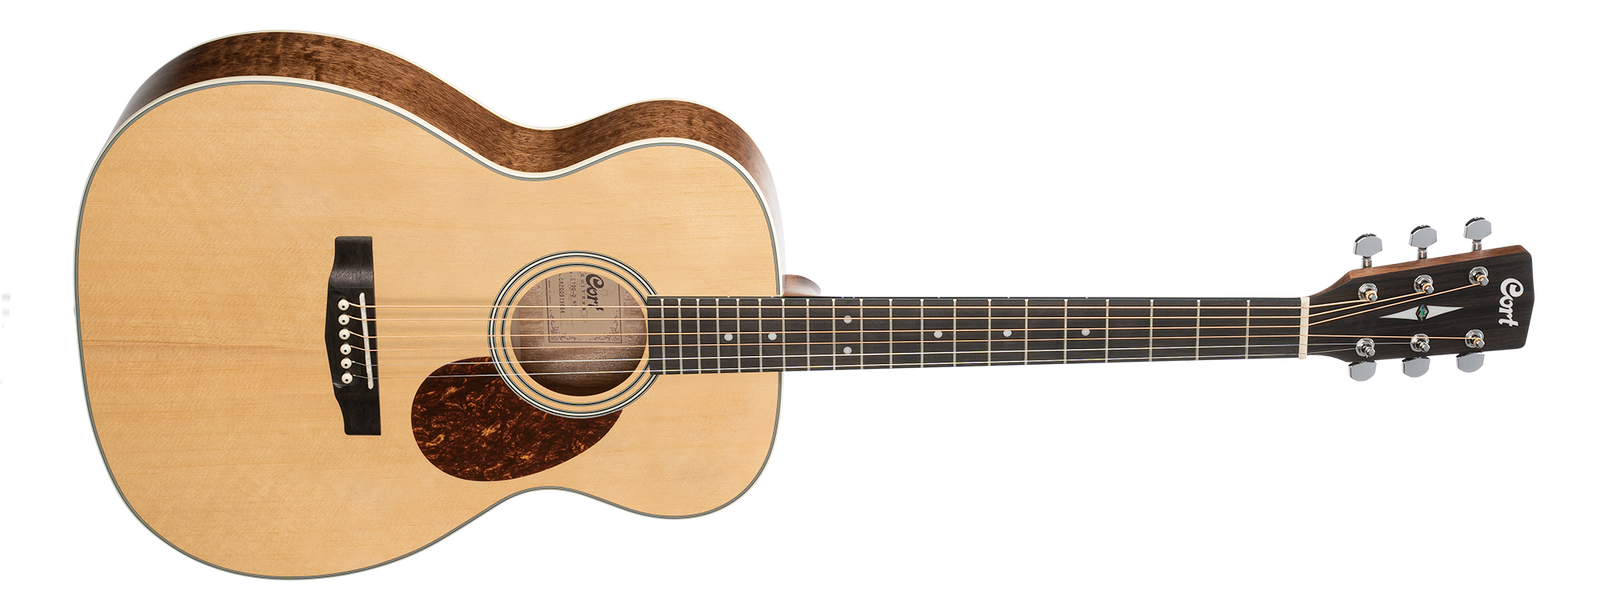 Cort L100-O OM Natural Satin Acoustic Guitar